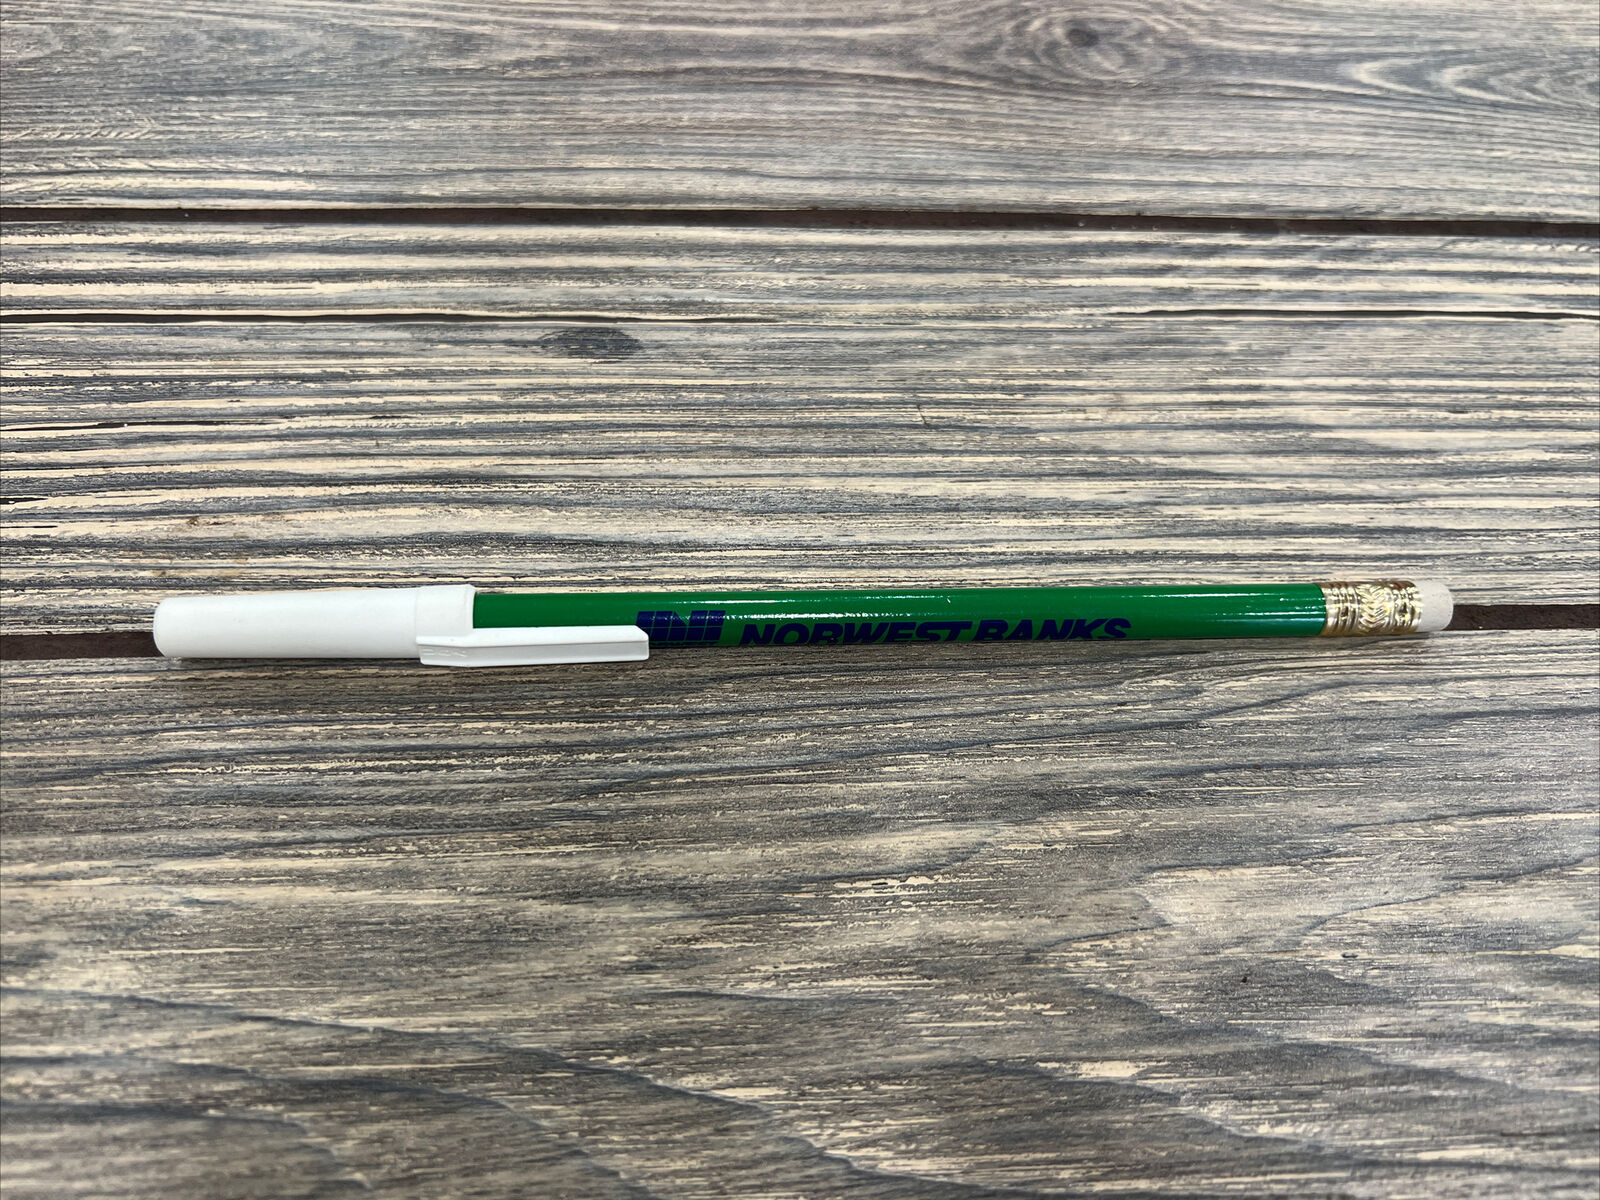 Vintage Pen Norwest Banks Member FDIC Green White with Eraser Advertisement